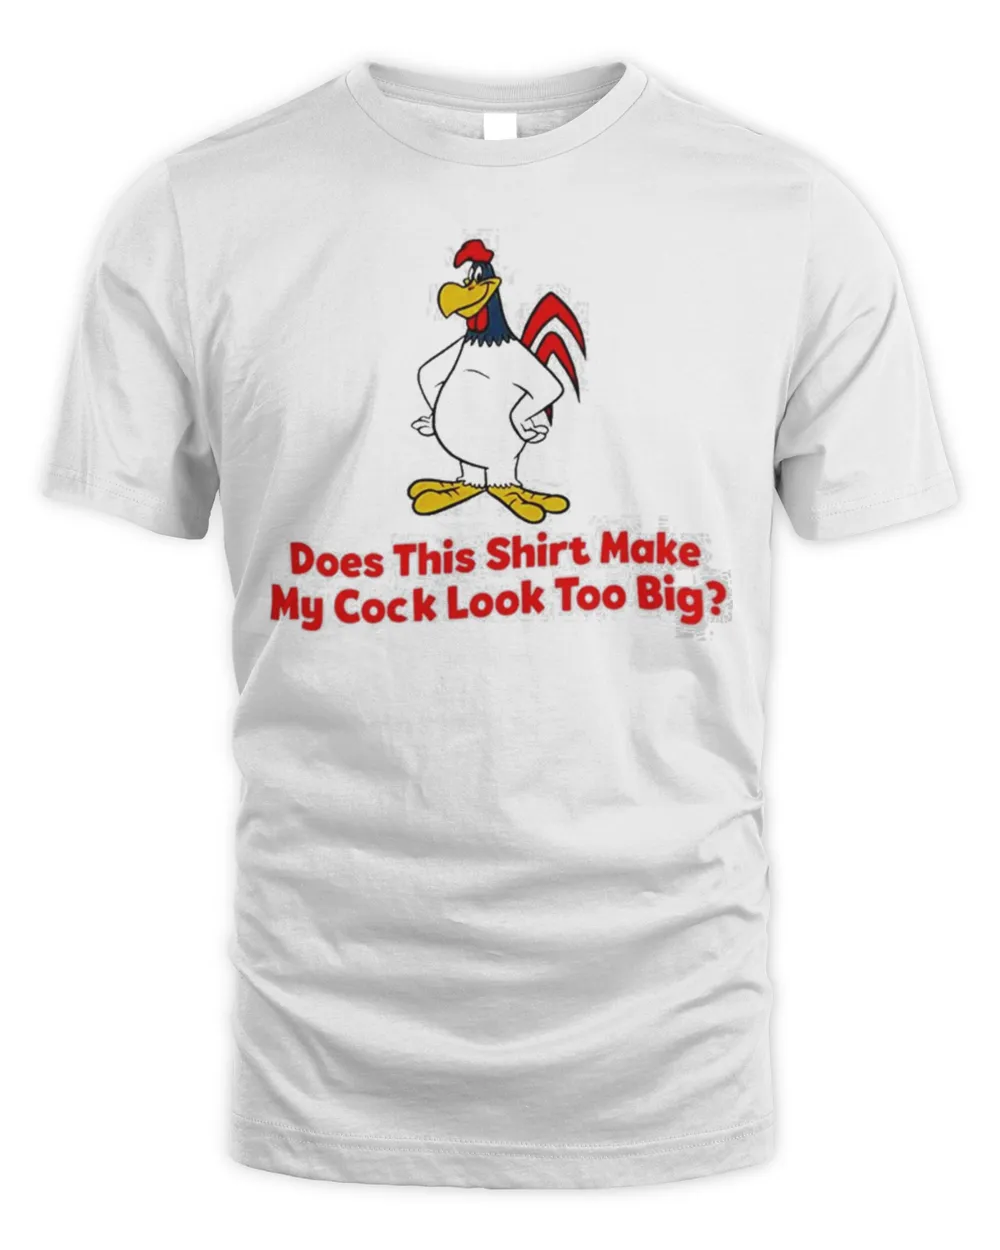 Does this shirt make my cock look too big 2022 shirt